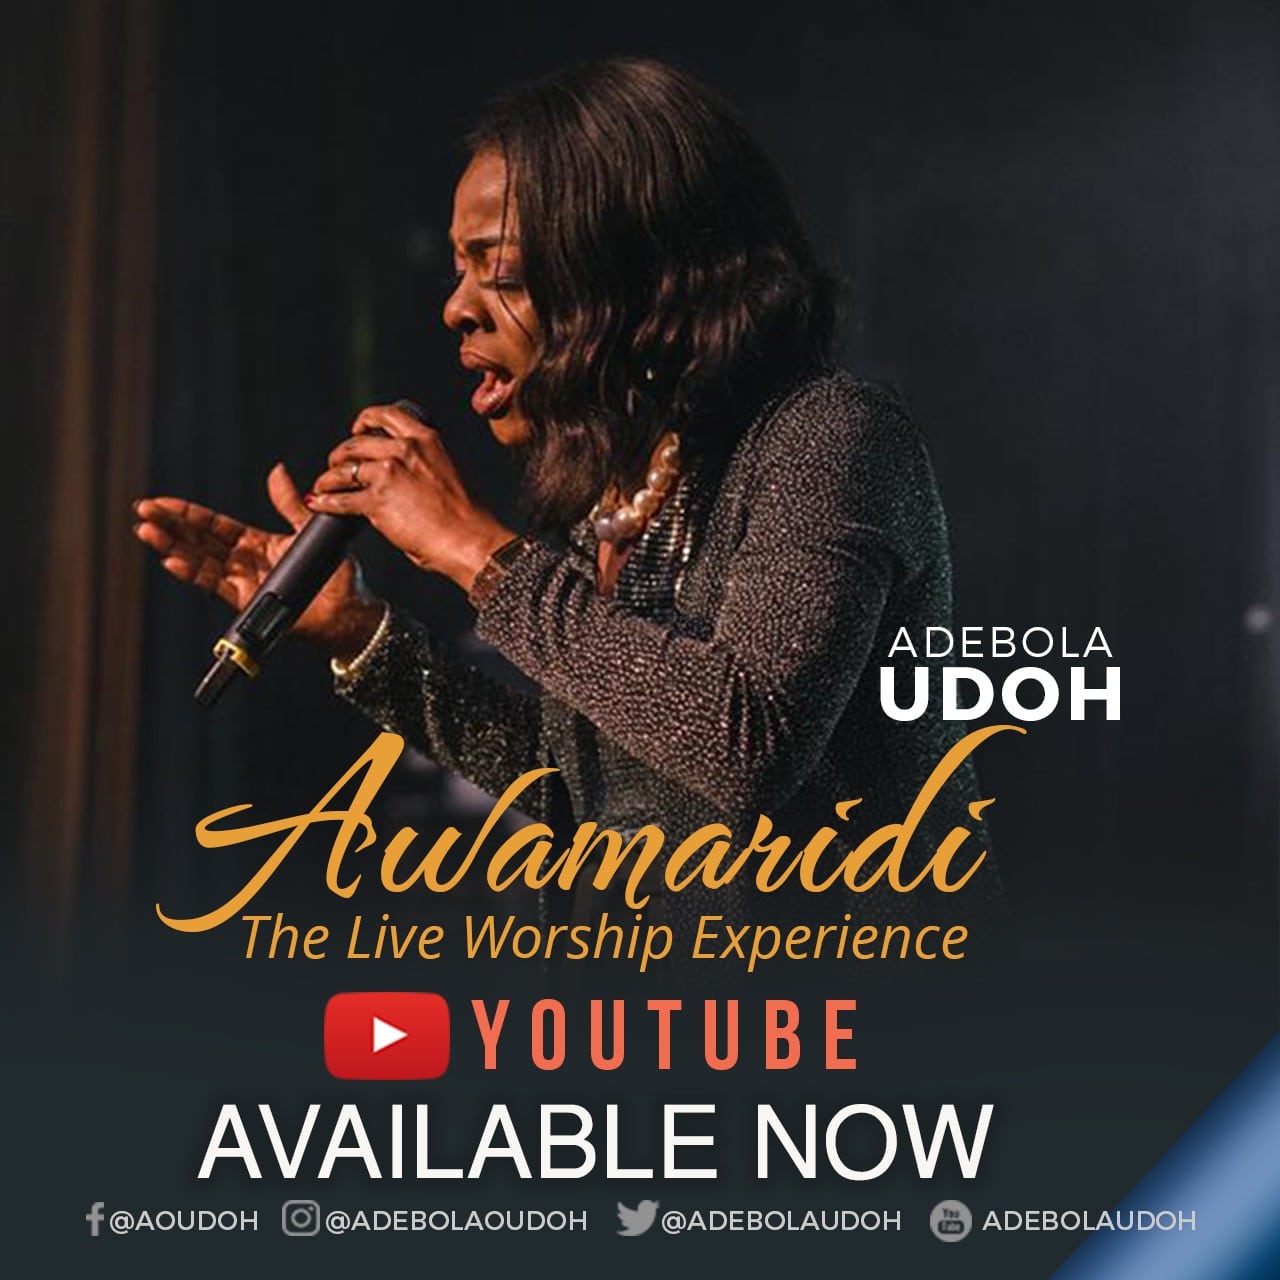 Awamaridi The Unsearchable God Adebola Udoh Live Worship